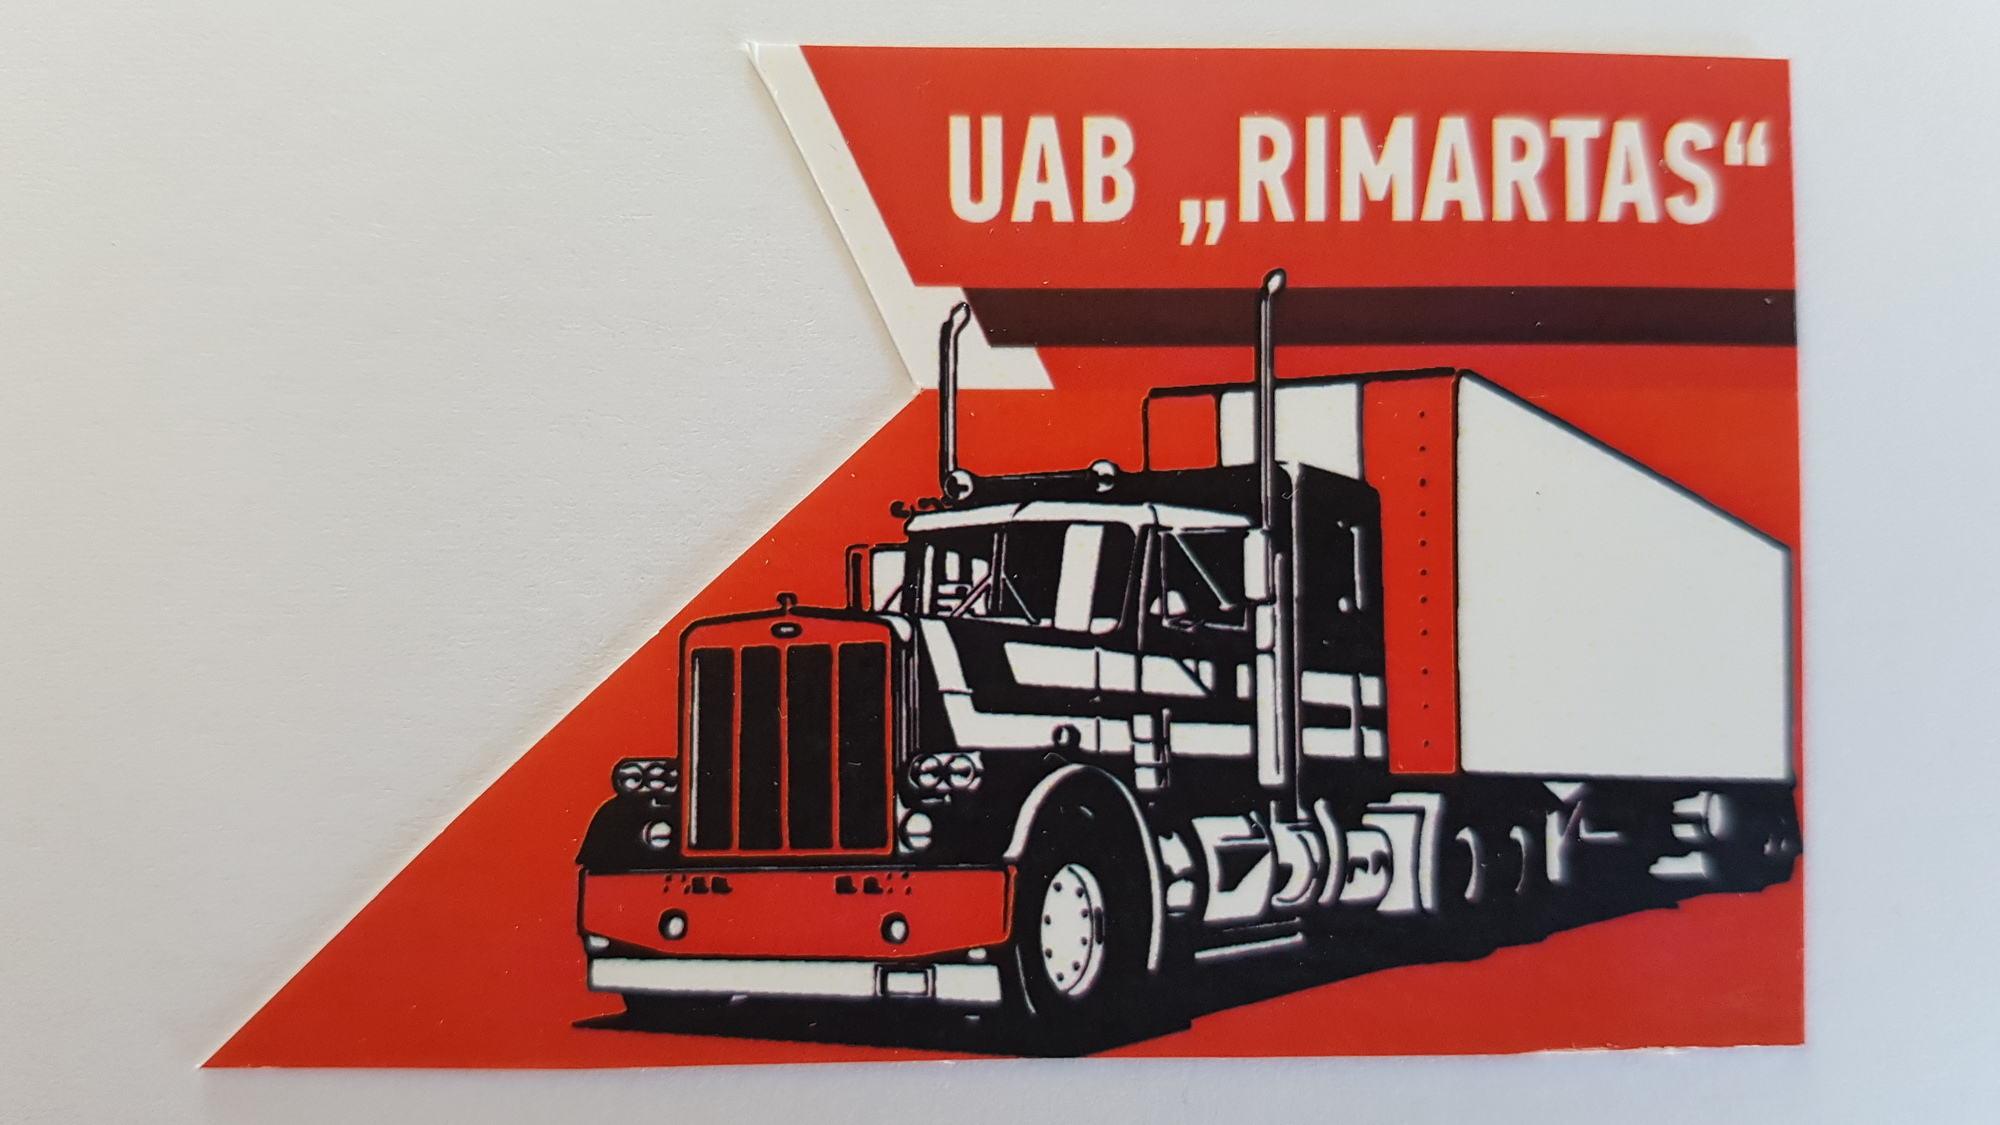 UAB "Rimartas" - eladó járművek undefined: 1 kép.